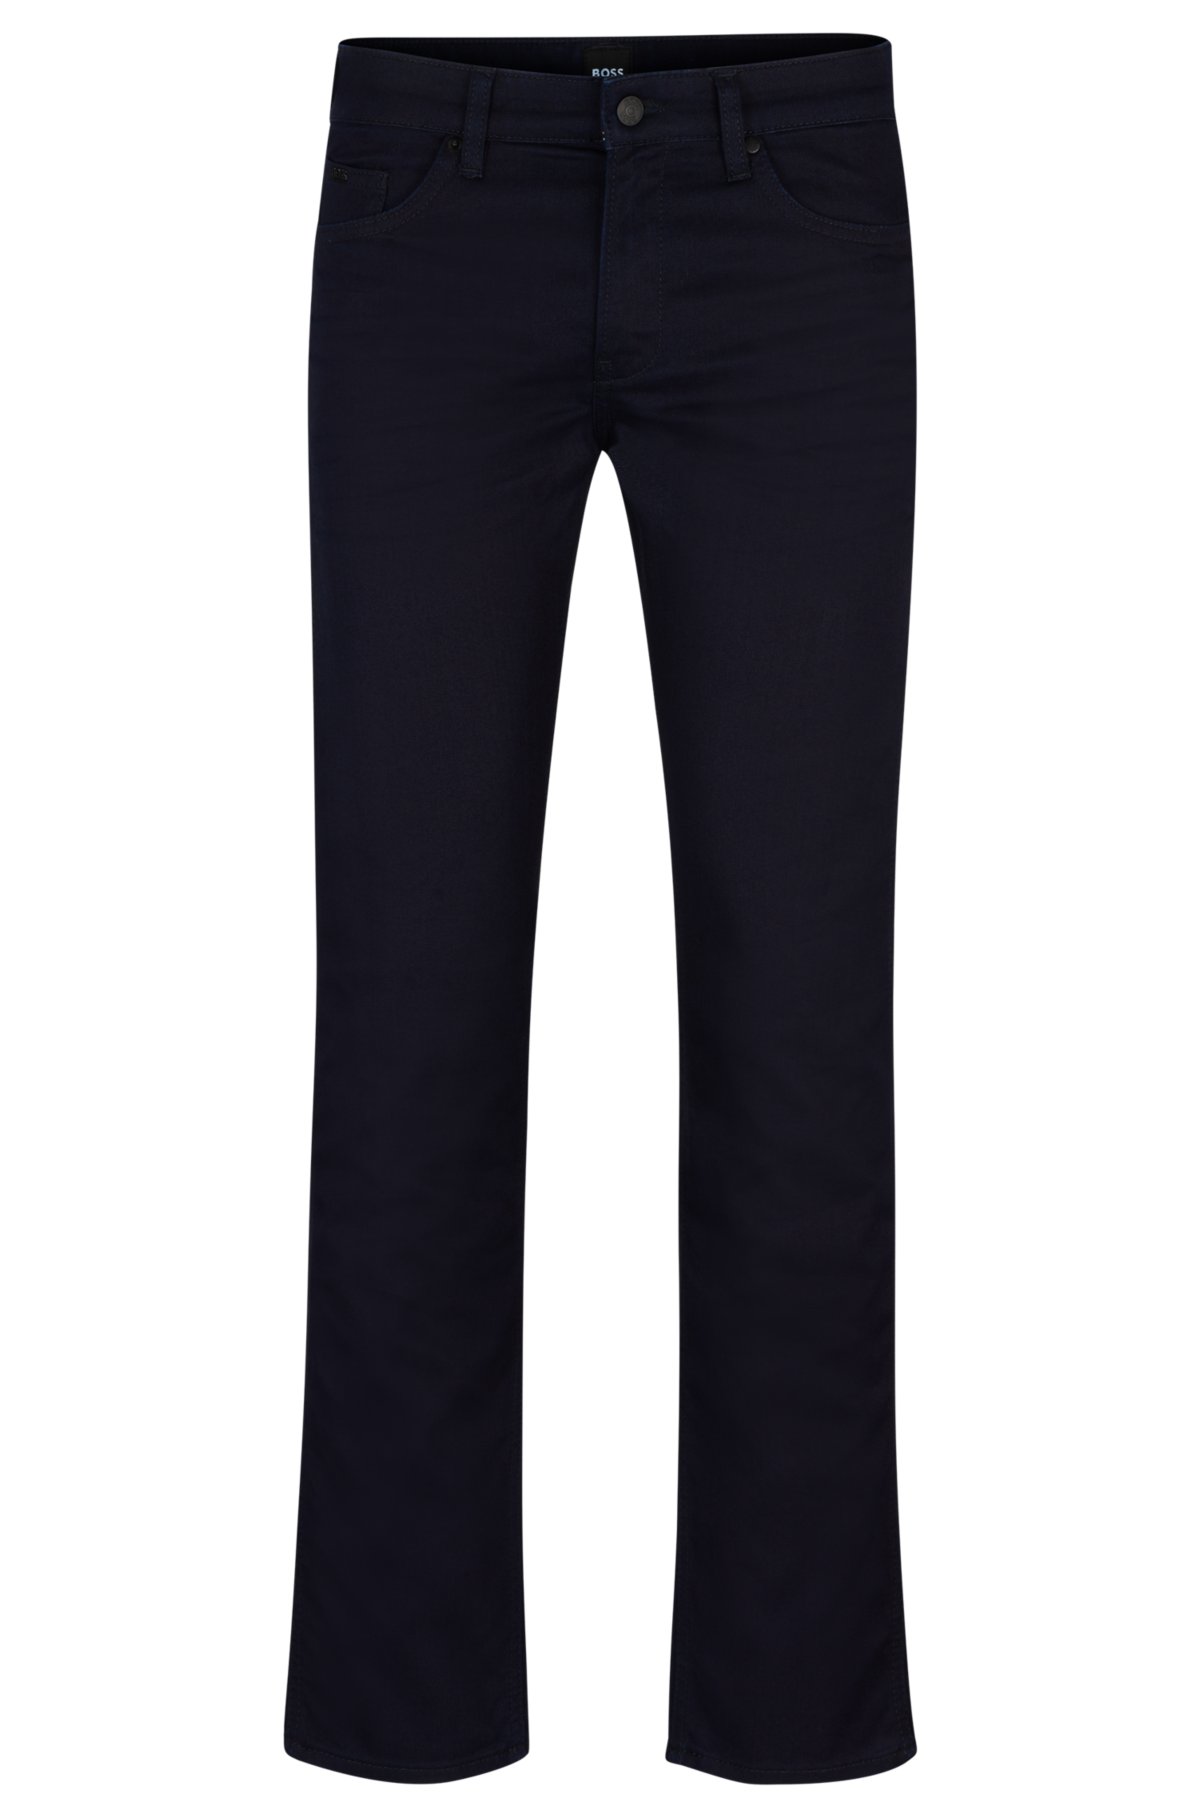 BOSS Slim-fit jeans blue-black comfort-stretch denim